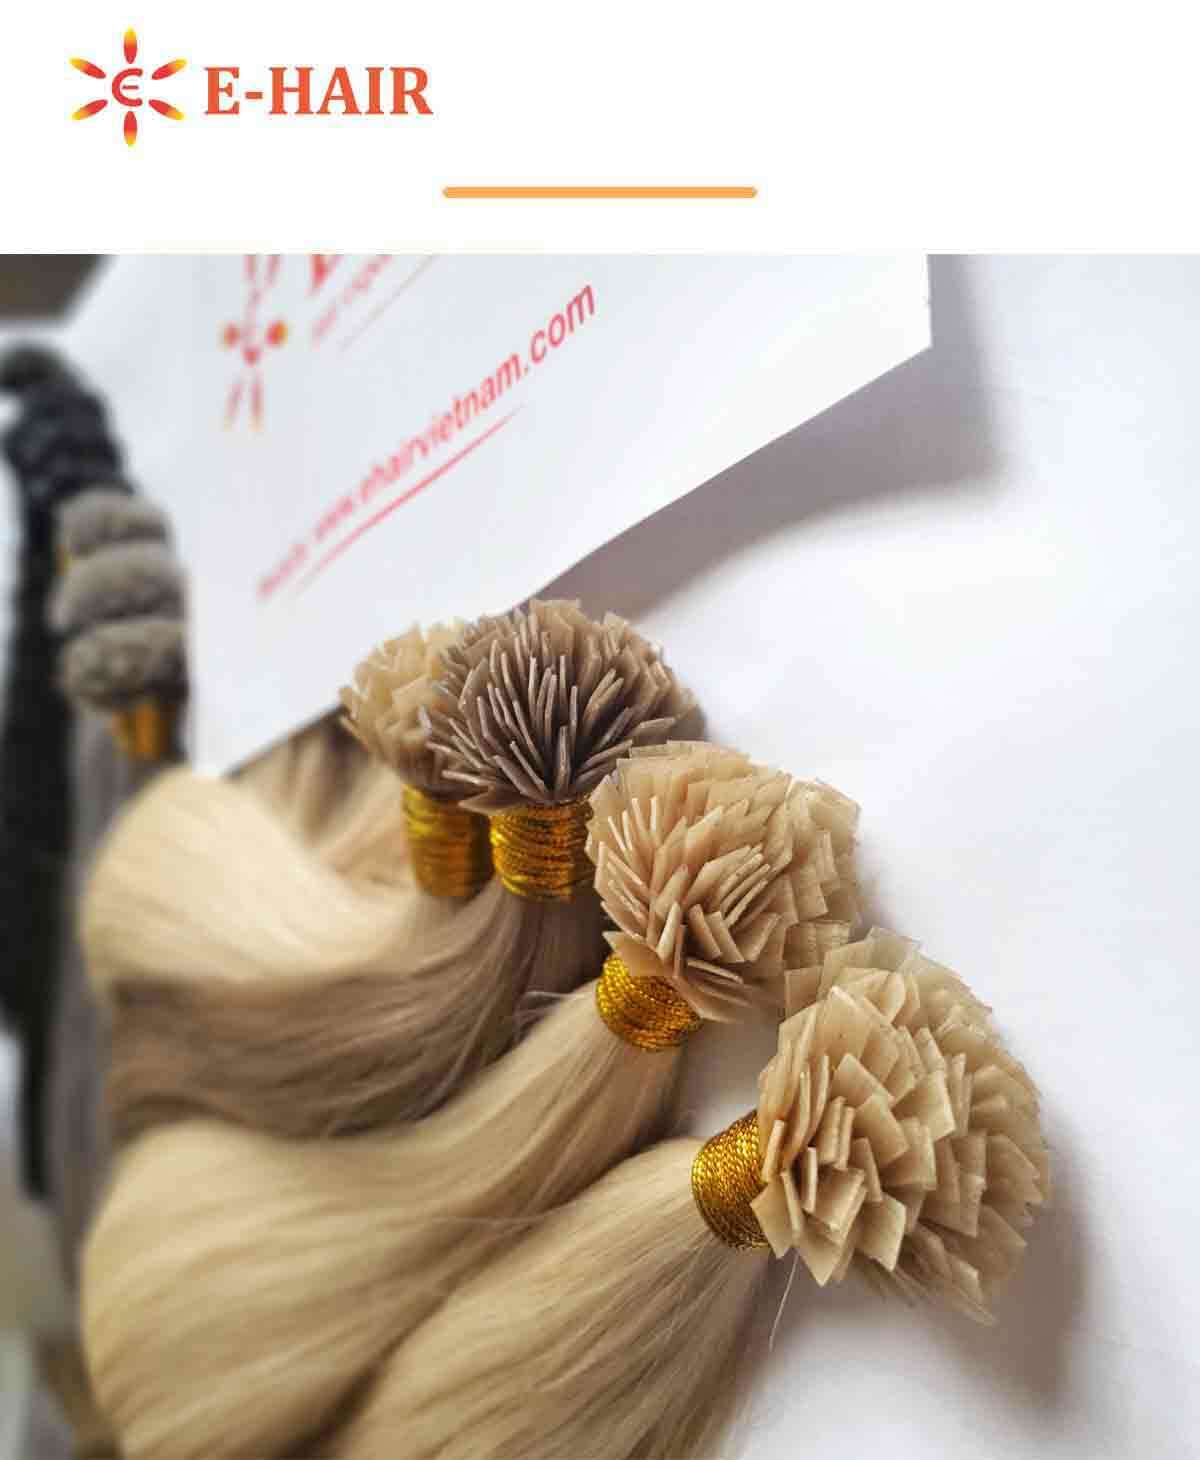 ehairvietnam, hair, hair extensions,wigs, vietnam hair, hair extensions,natural hair, hair extensions,export hair